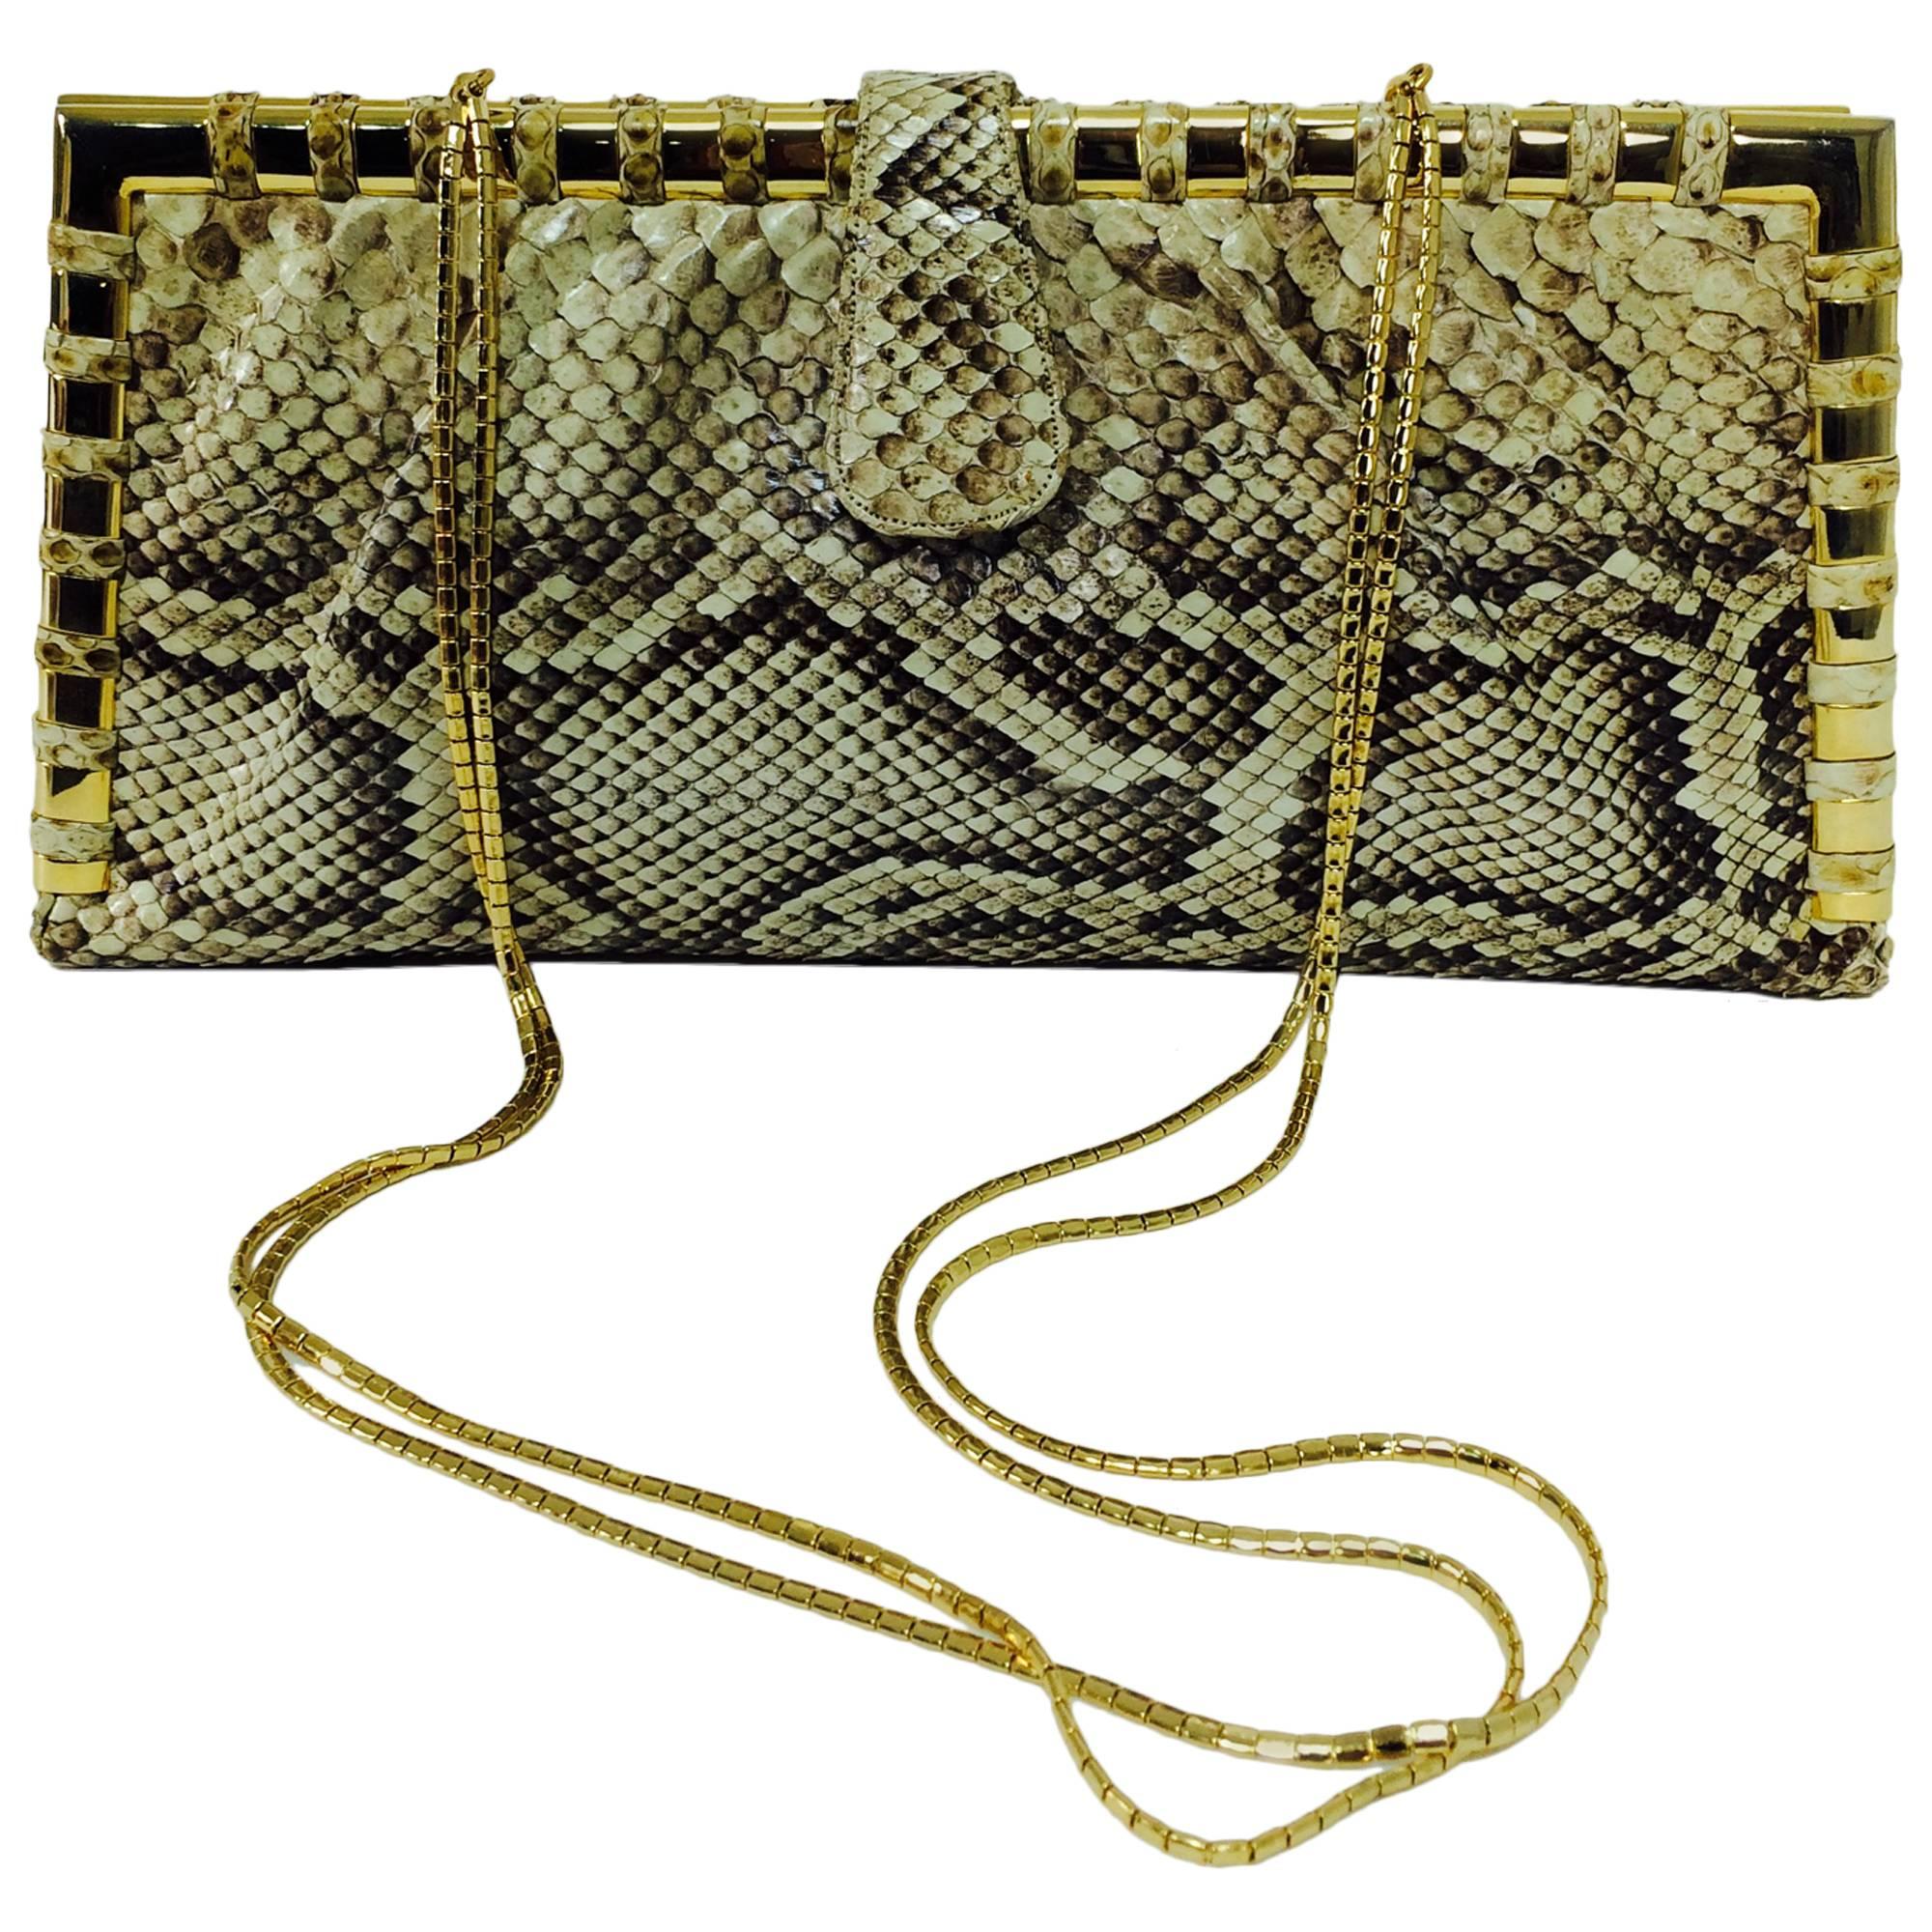 Judith Leiber natural python gold frame snake chain handbag or clutch 